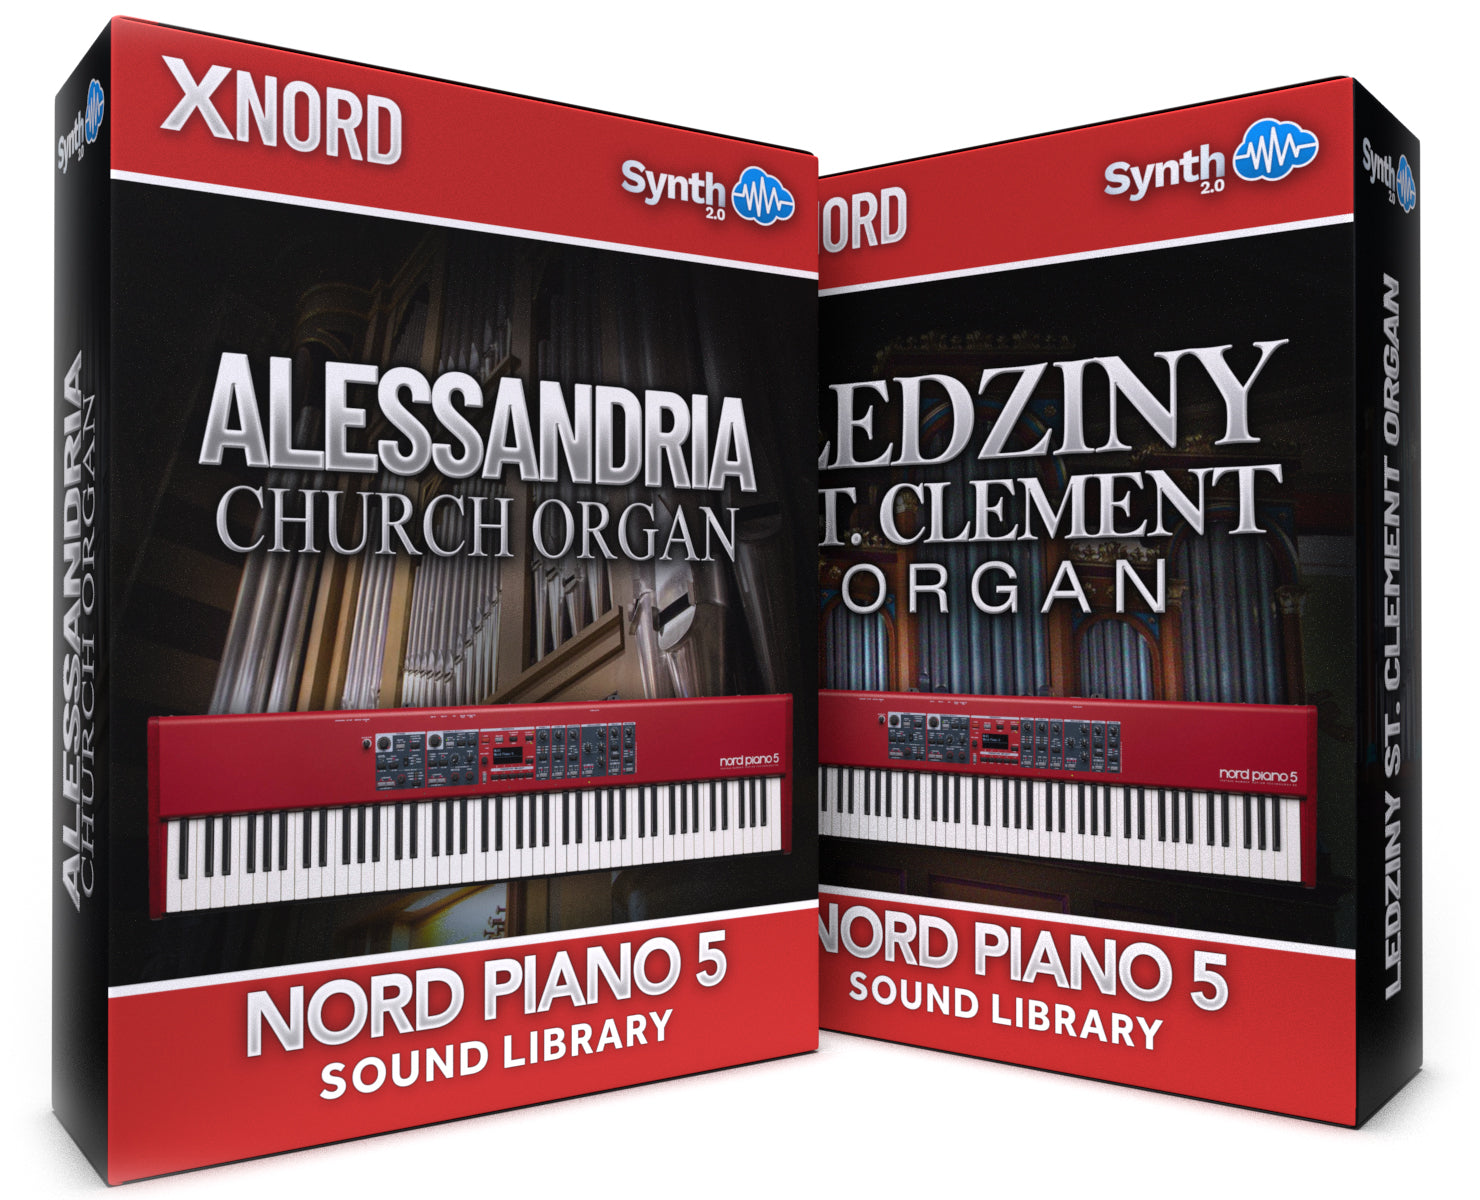 RCL014 - ( Bundle ) - Alessandria Organ + Ledziny, St. Clement Organ - Nord Piano 5